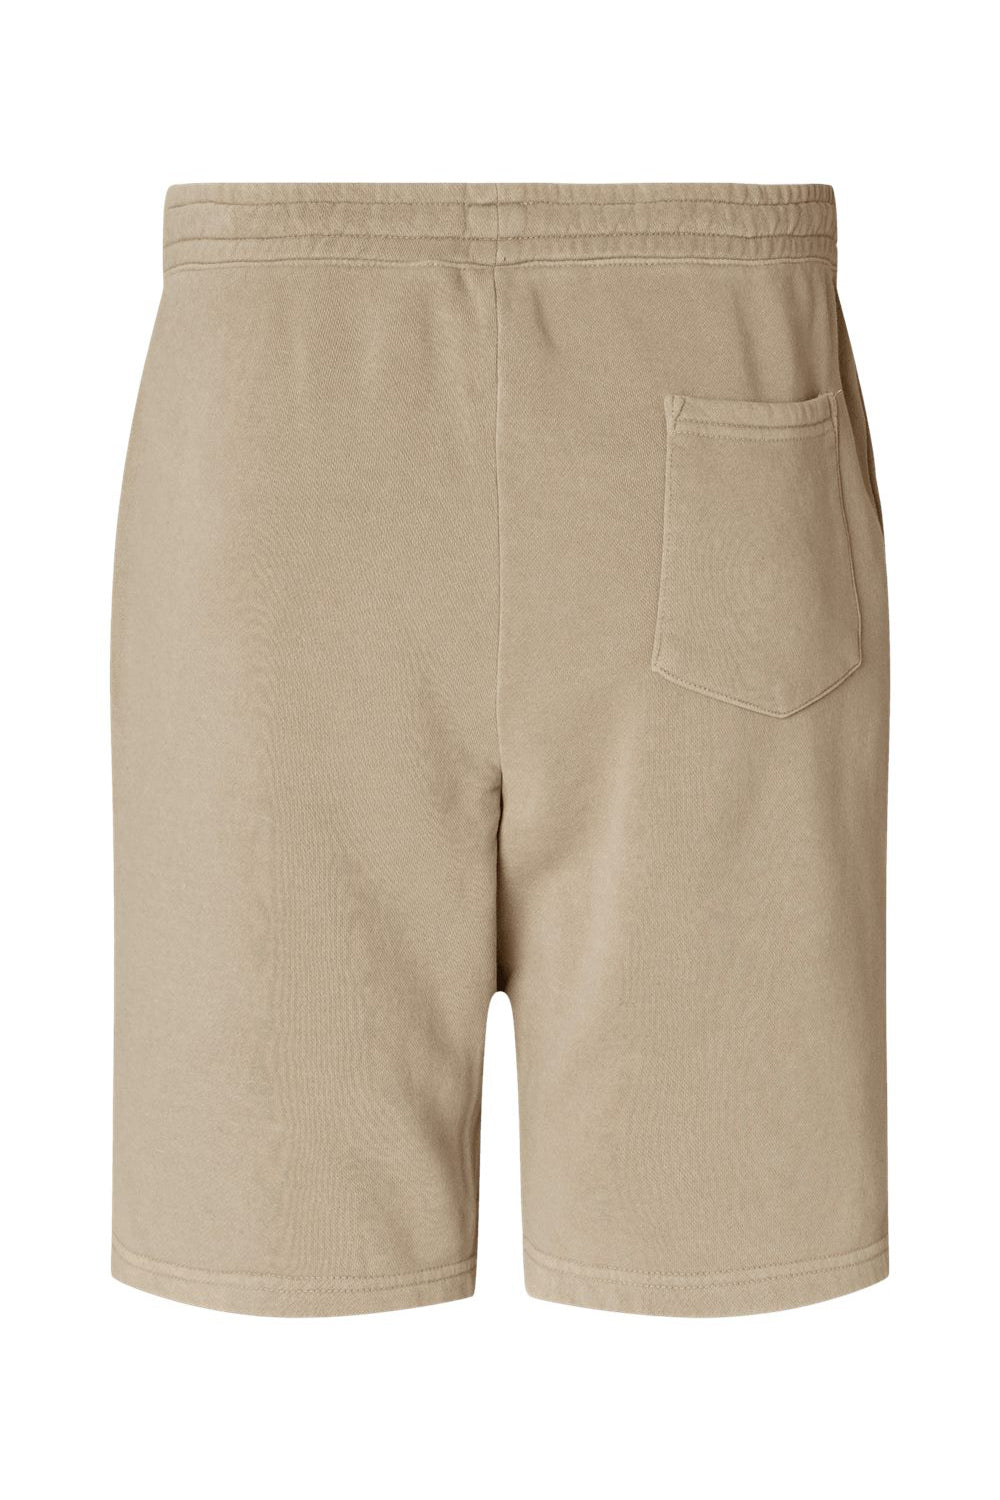 Independent Trading Co. PRM50STPD Mens Pigment Dyed Fleece Shorts w/ Pockets Sandstone Brown Flat Back